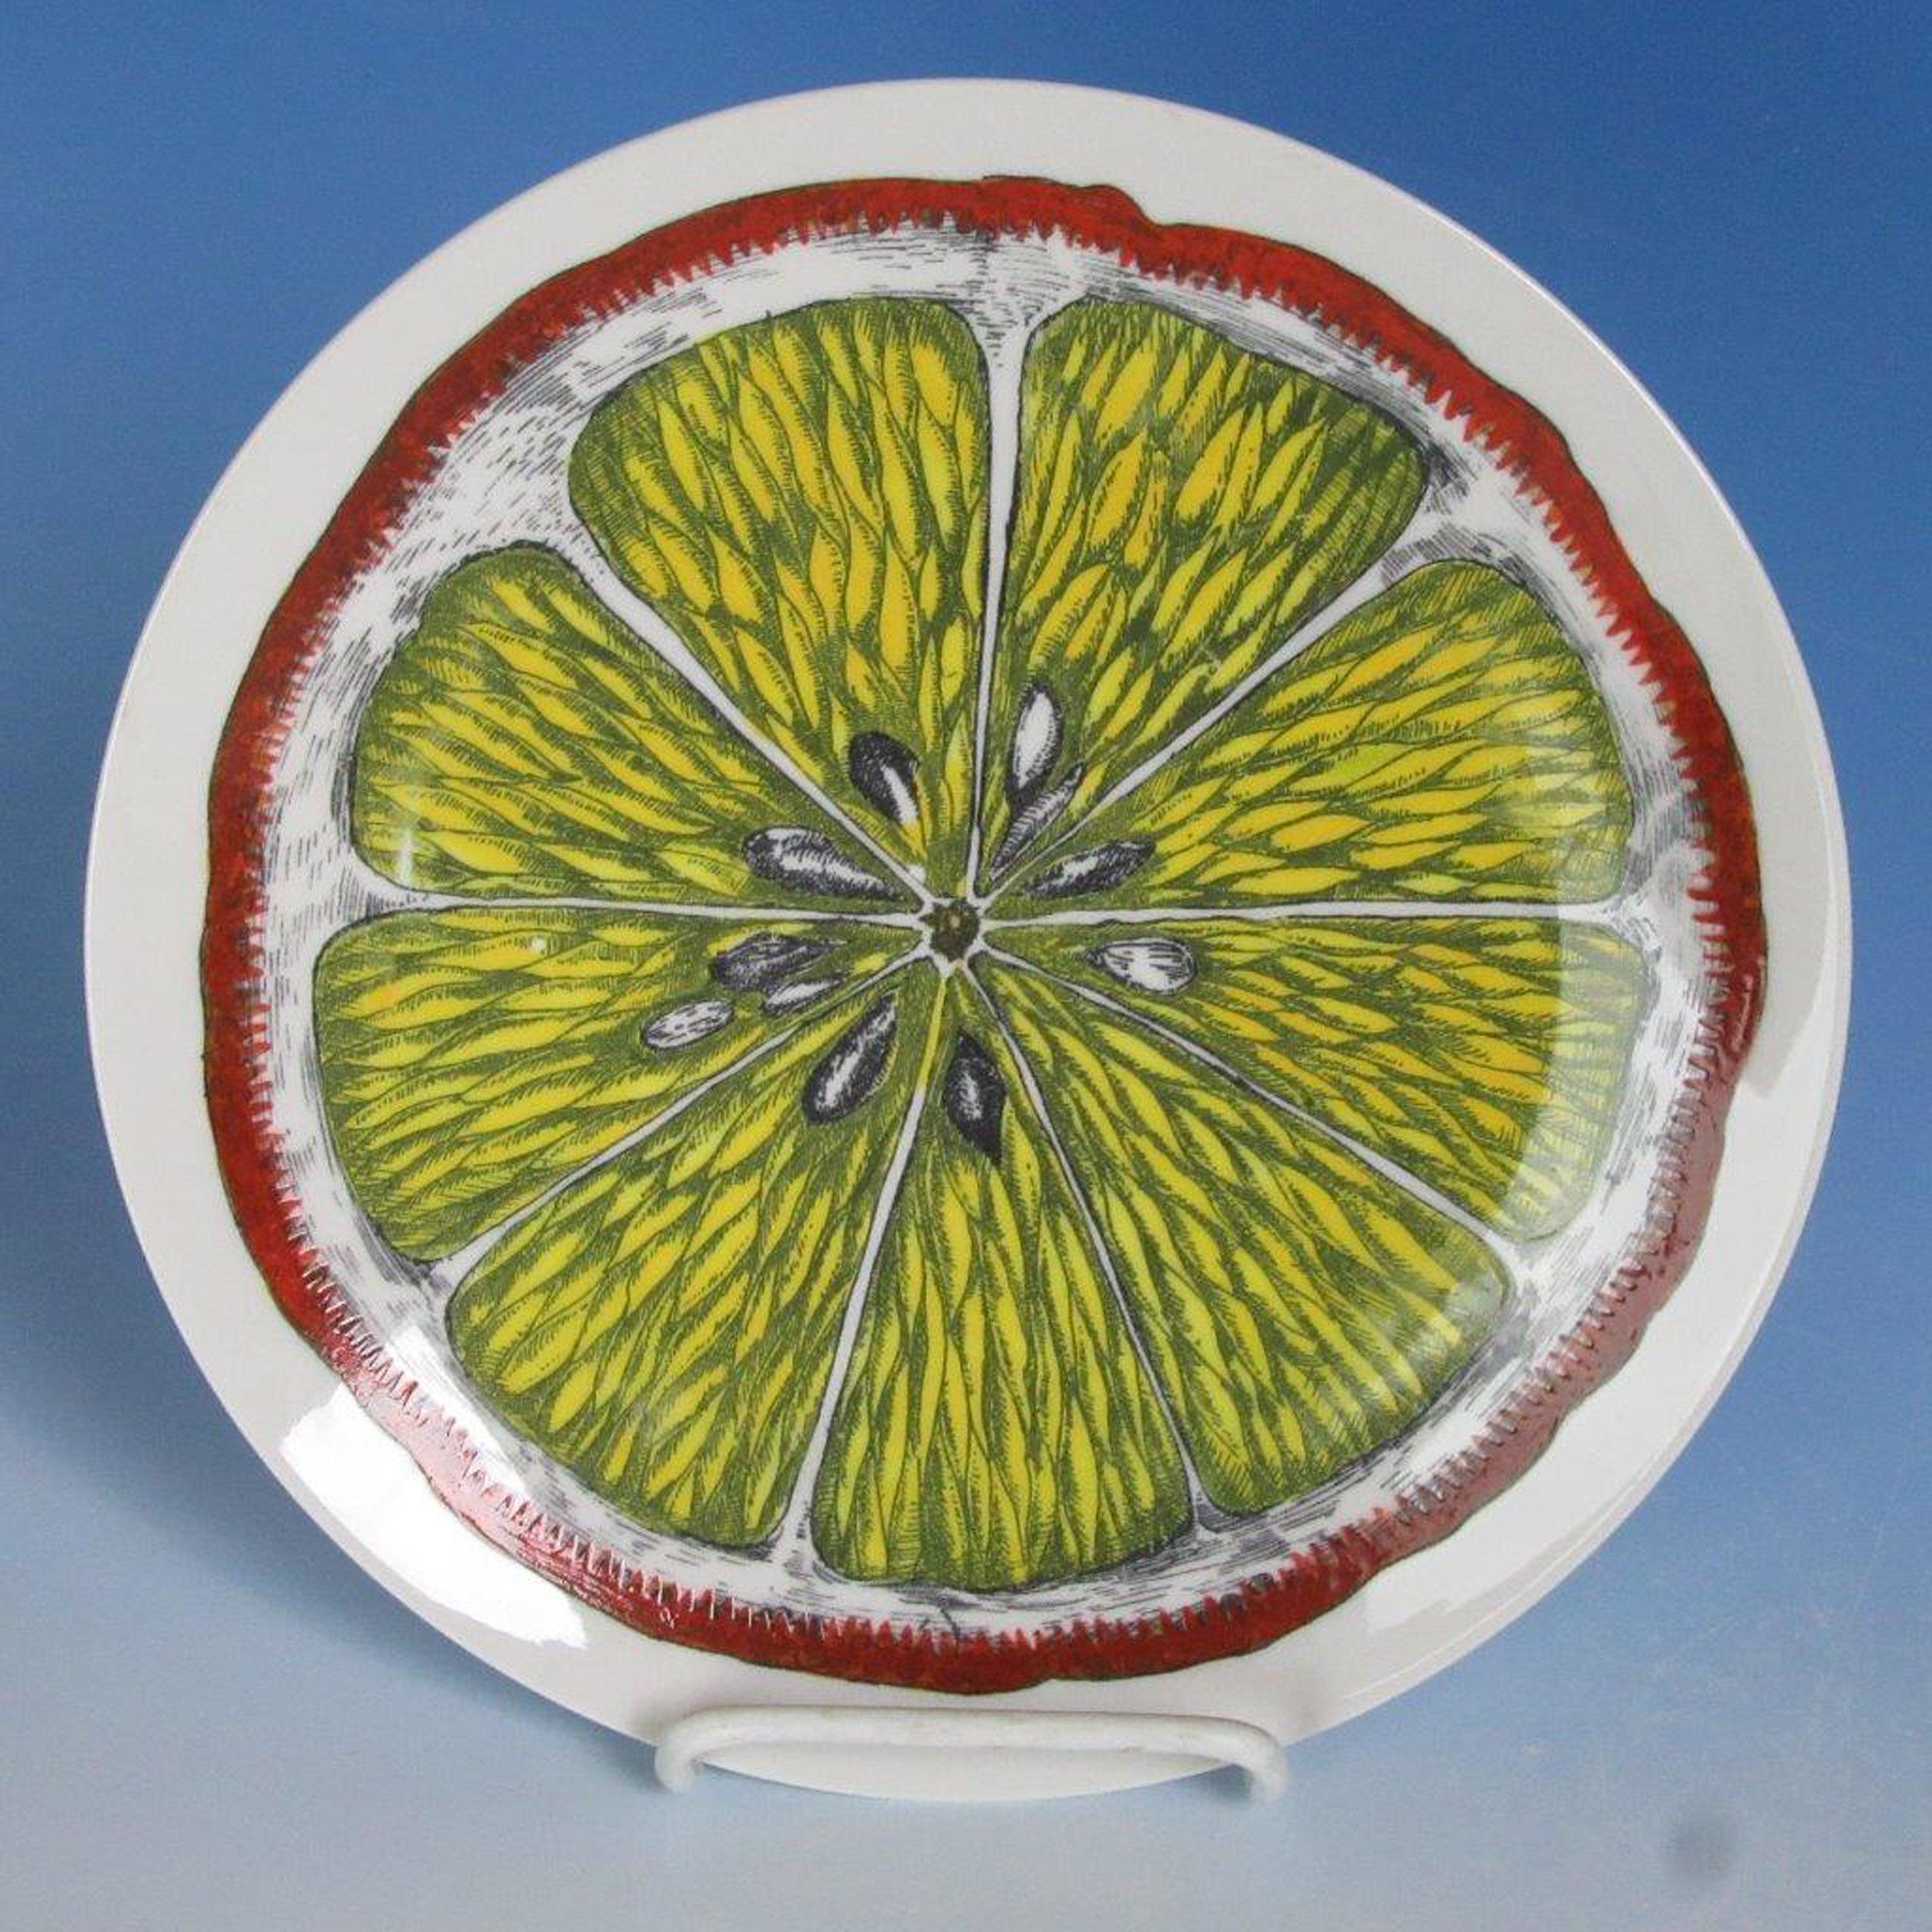 Piero Fornasetti Sezioni Frutta plate, 
#1, 
1970s-1980s.
The plate depicting a sliced fruit.
Measures: Diameter 9 1/2 inches.